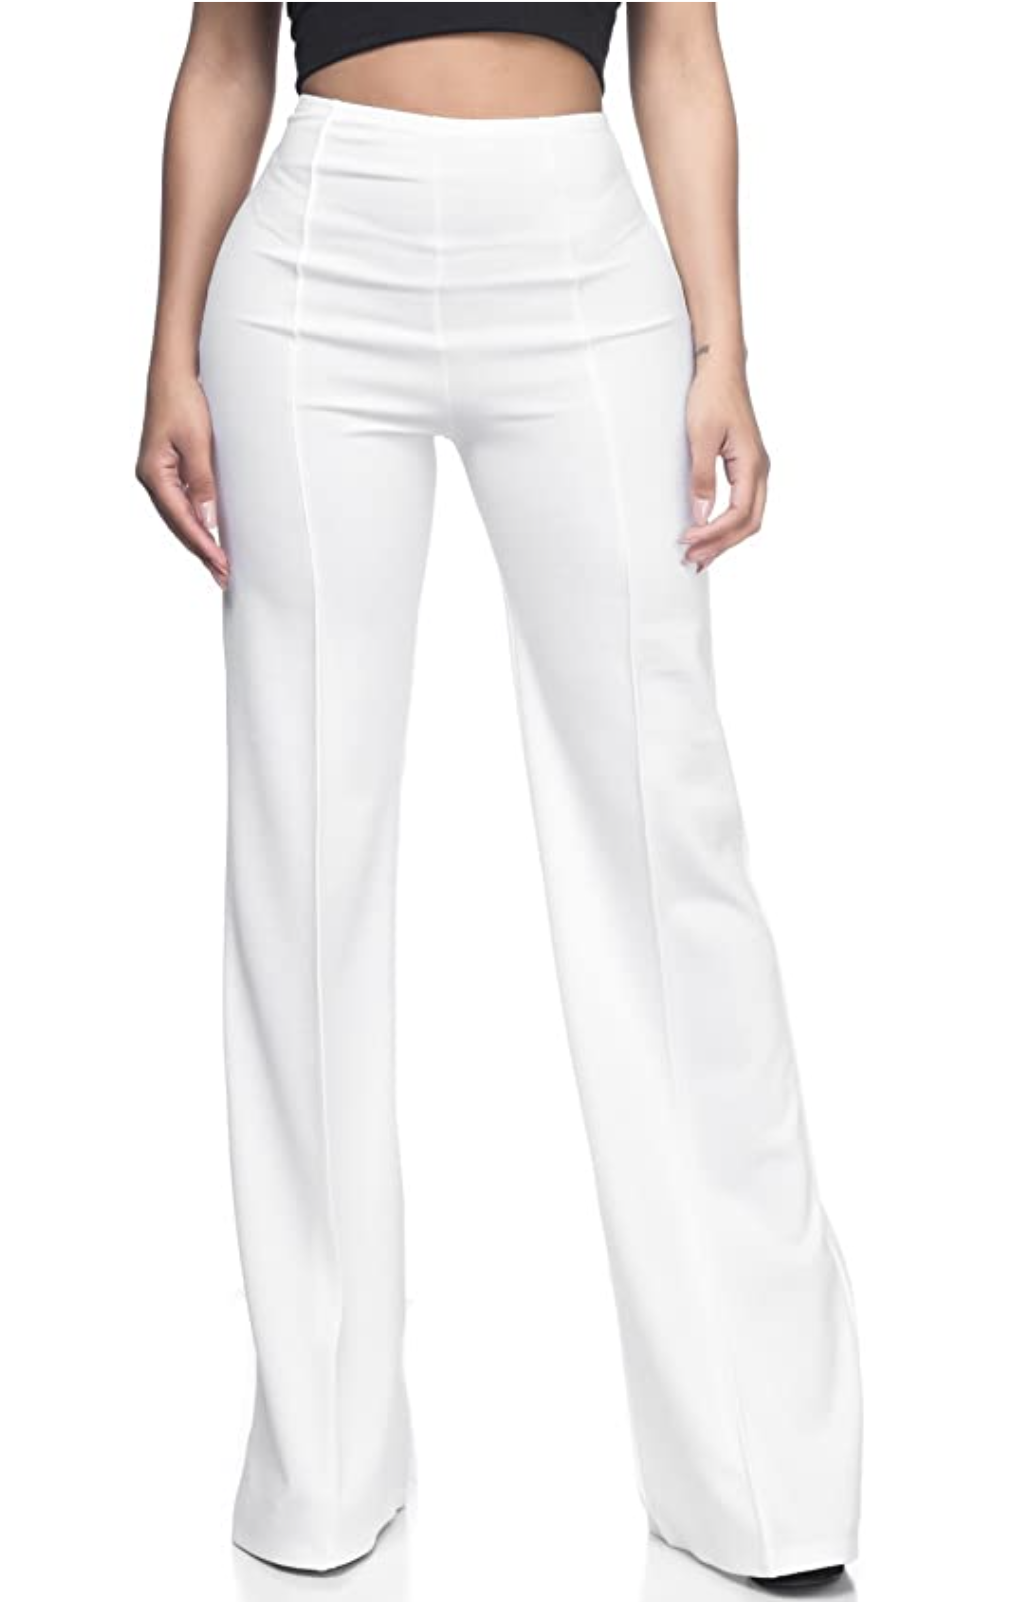 white pants womens